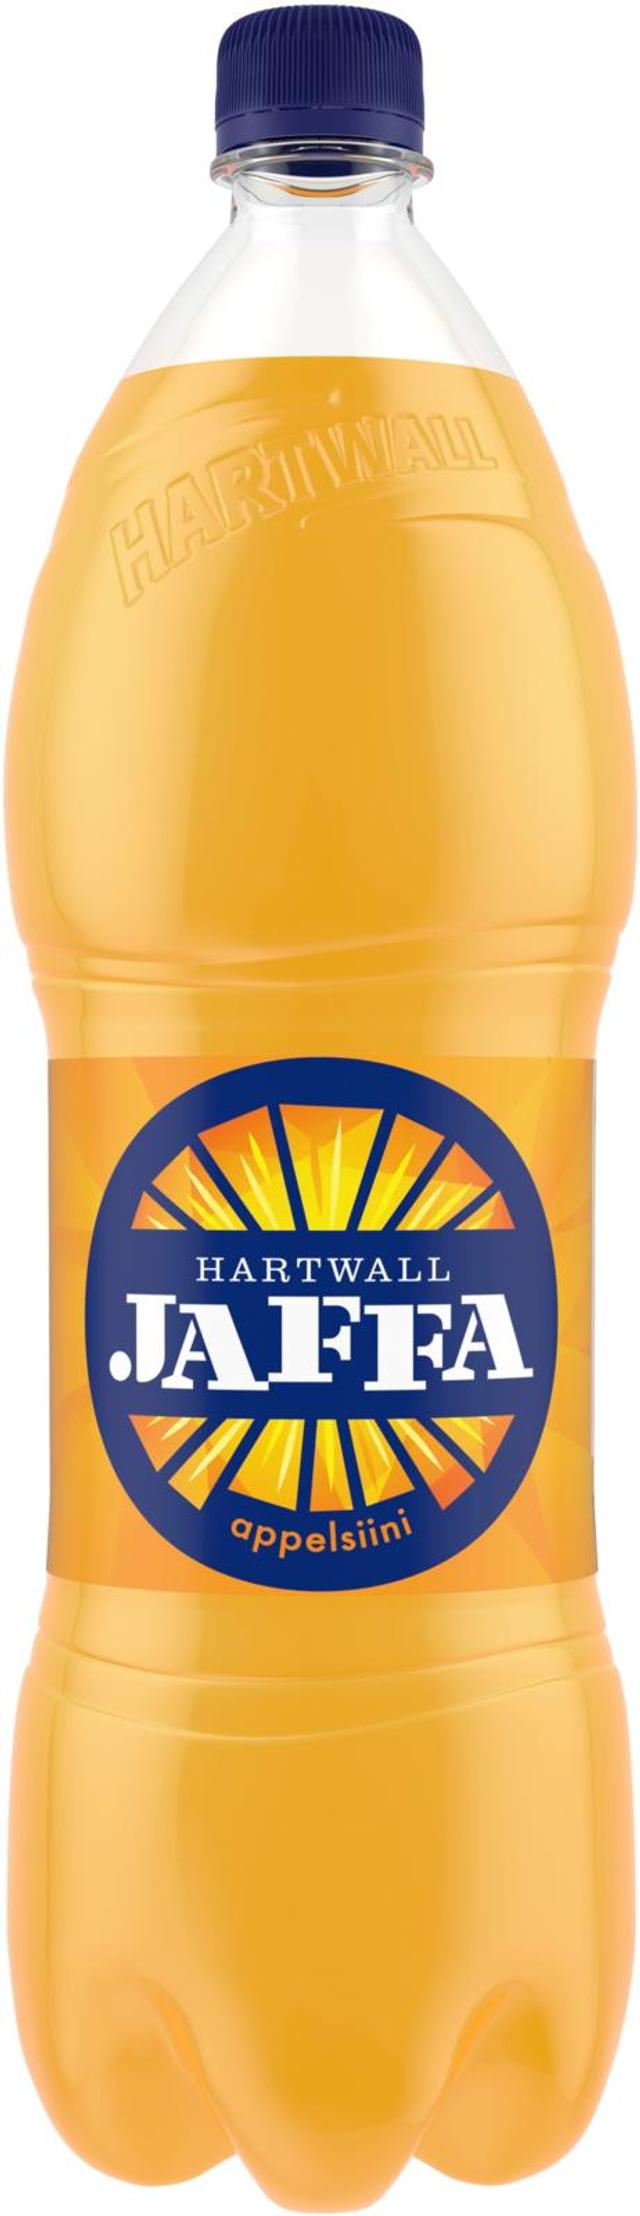 Hartwall Jaffa Appelsiini virvoitusjuoma 1,5 l